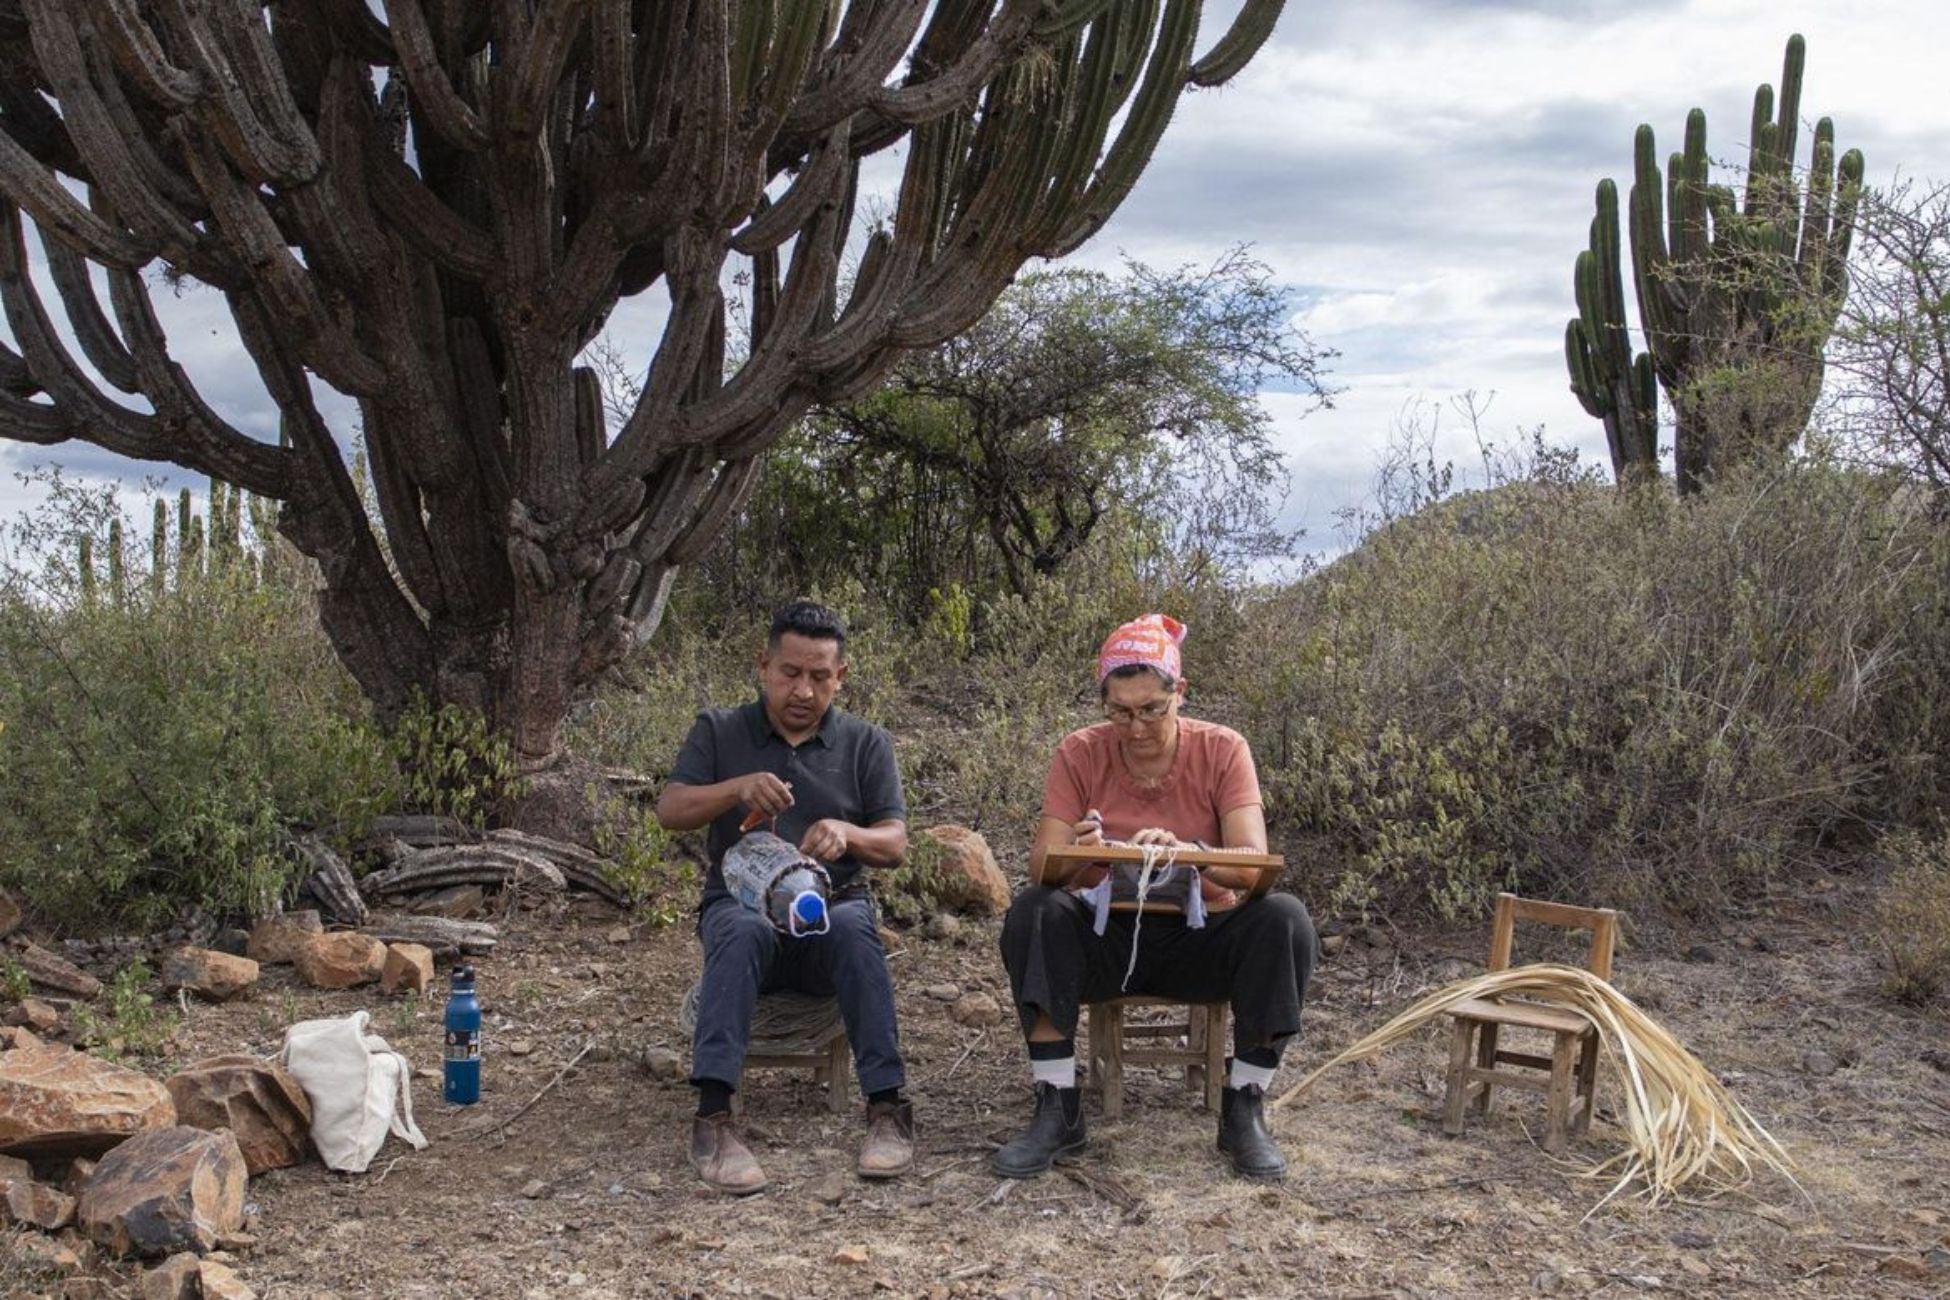 Two people sit on small chairs in a field in Oaxaca, weaving.